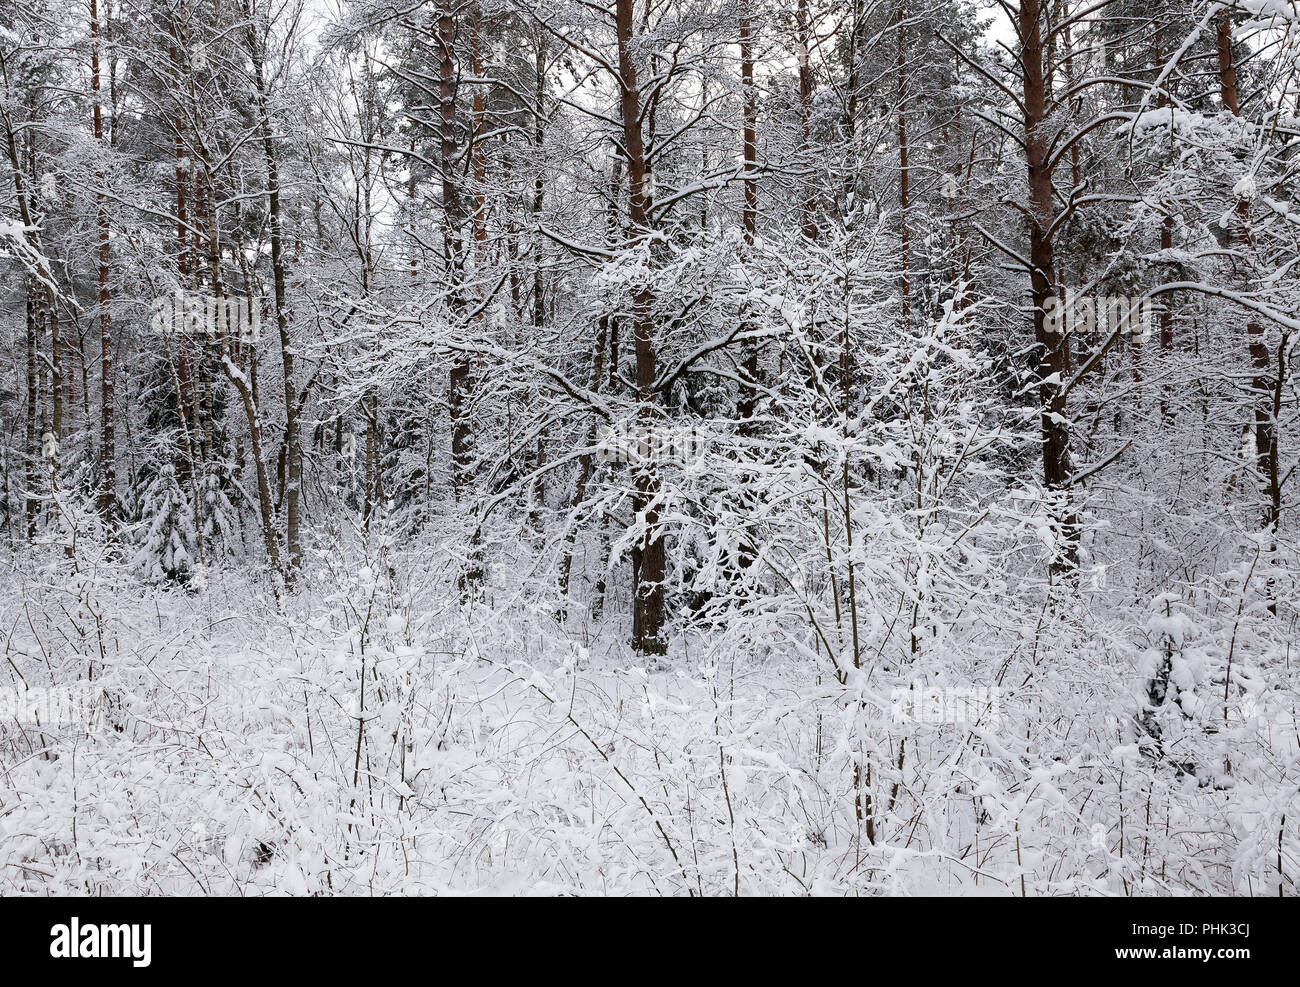 Bäume im Winter, close-up im frostigen Wetter fotografiert. Stockfoto